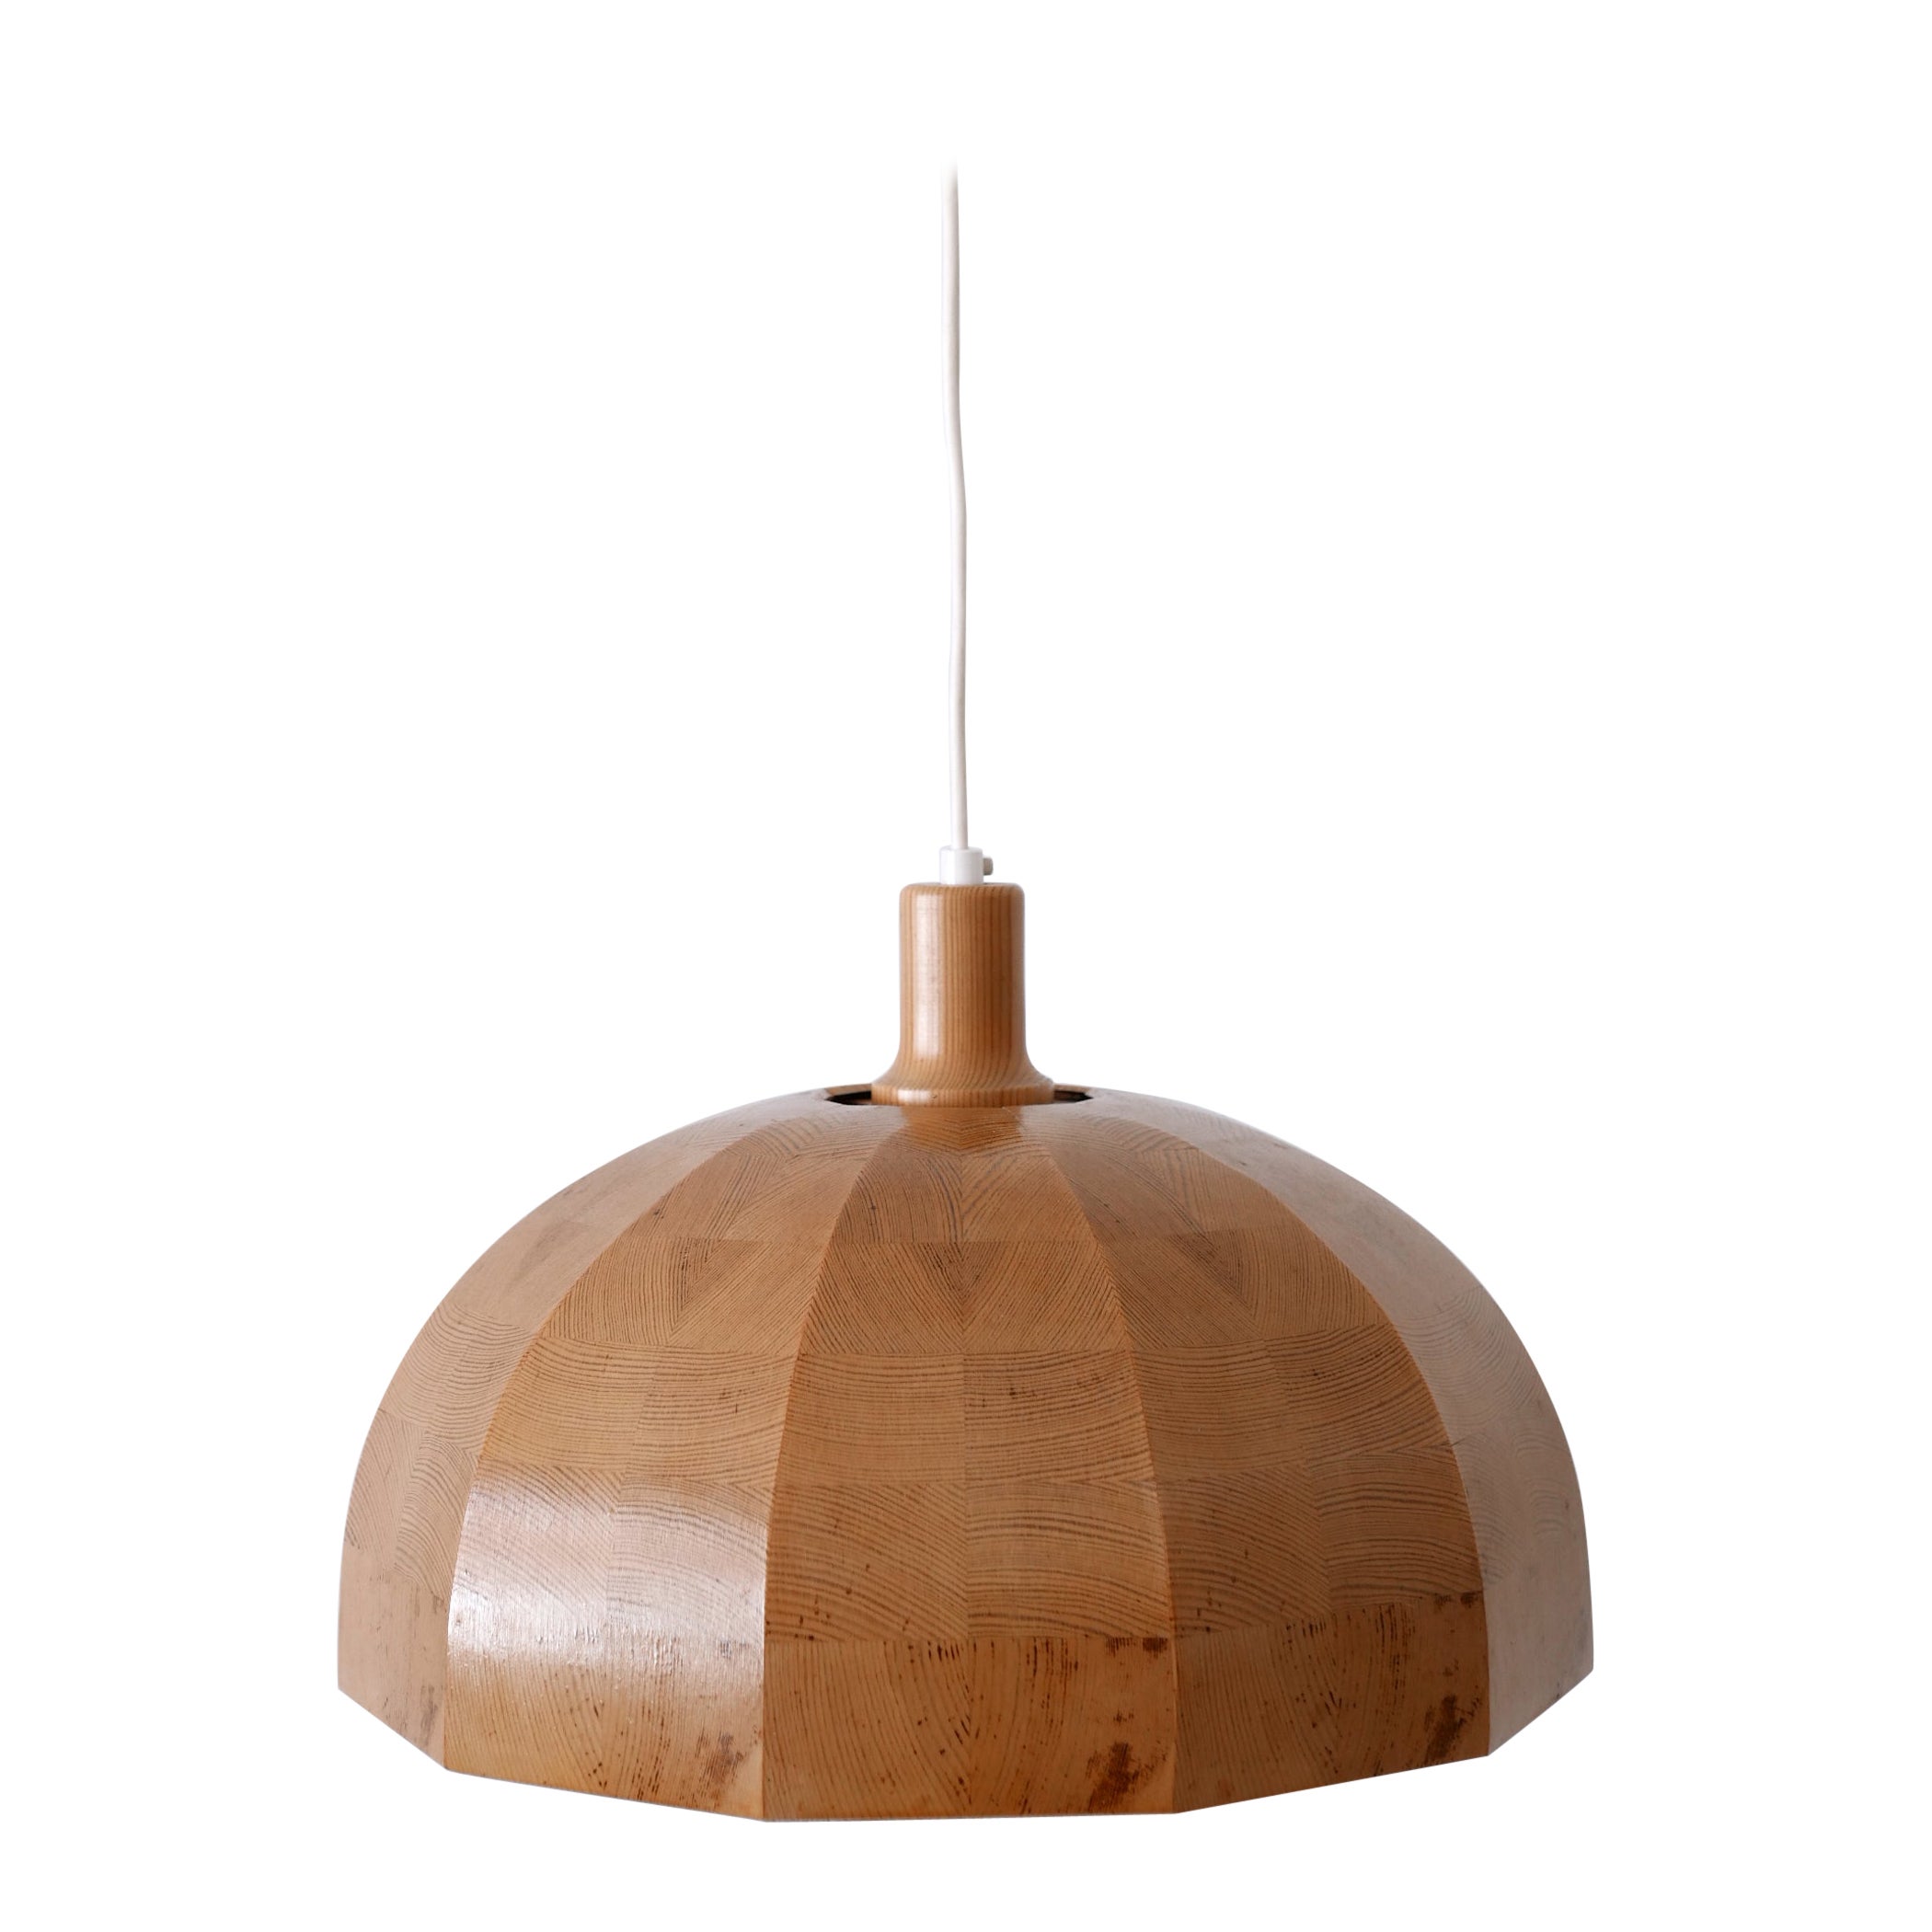 Rare Mid-Century Modern Pine Wood Pendant Lamp or Hanging Light Sweden, 1960s For Sale